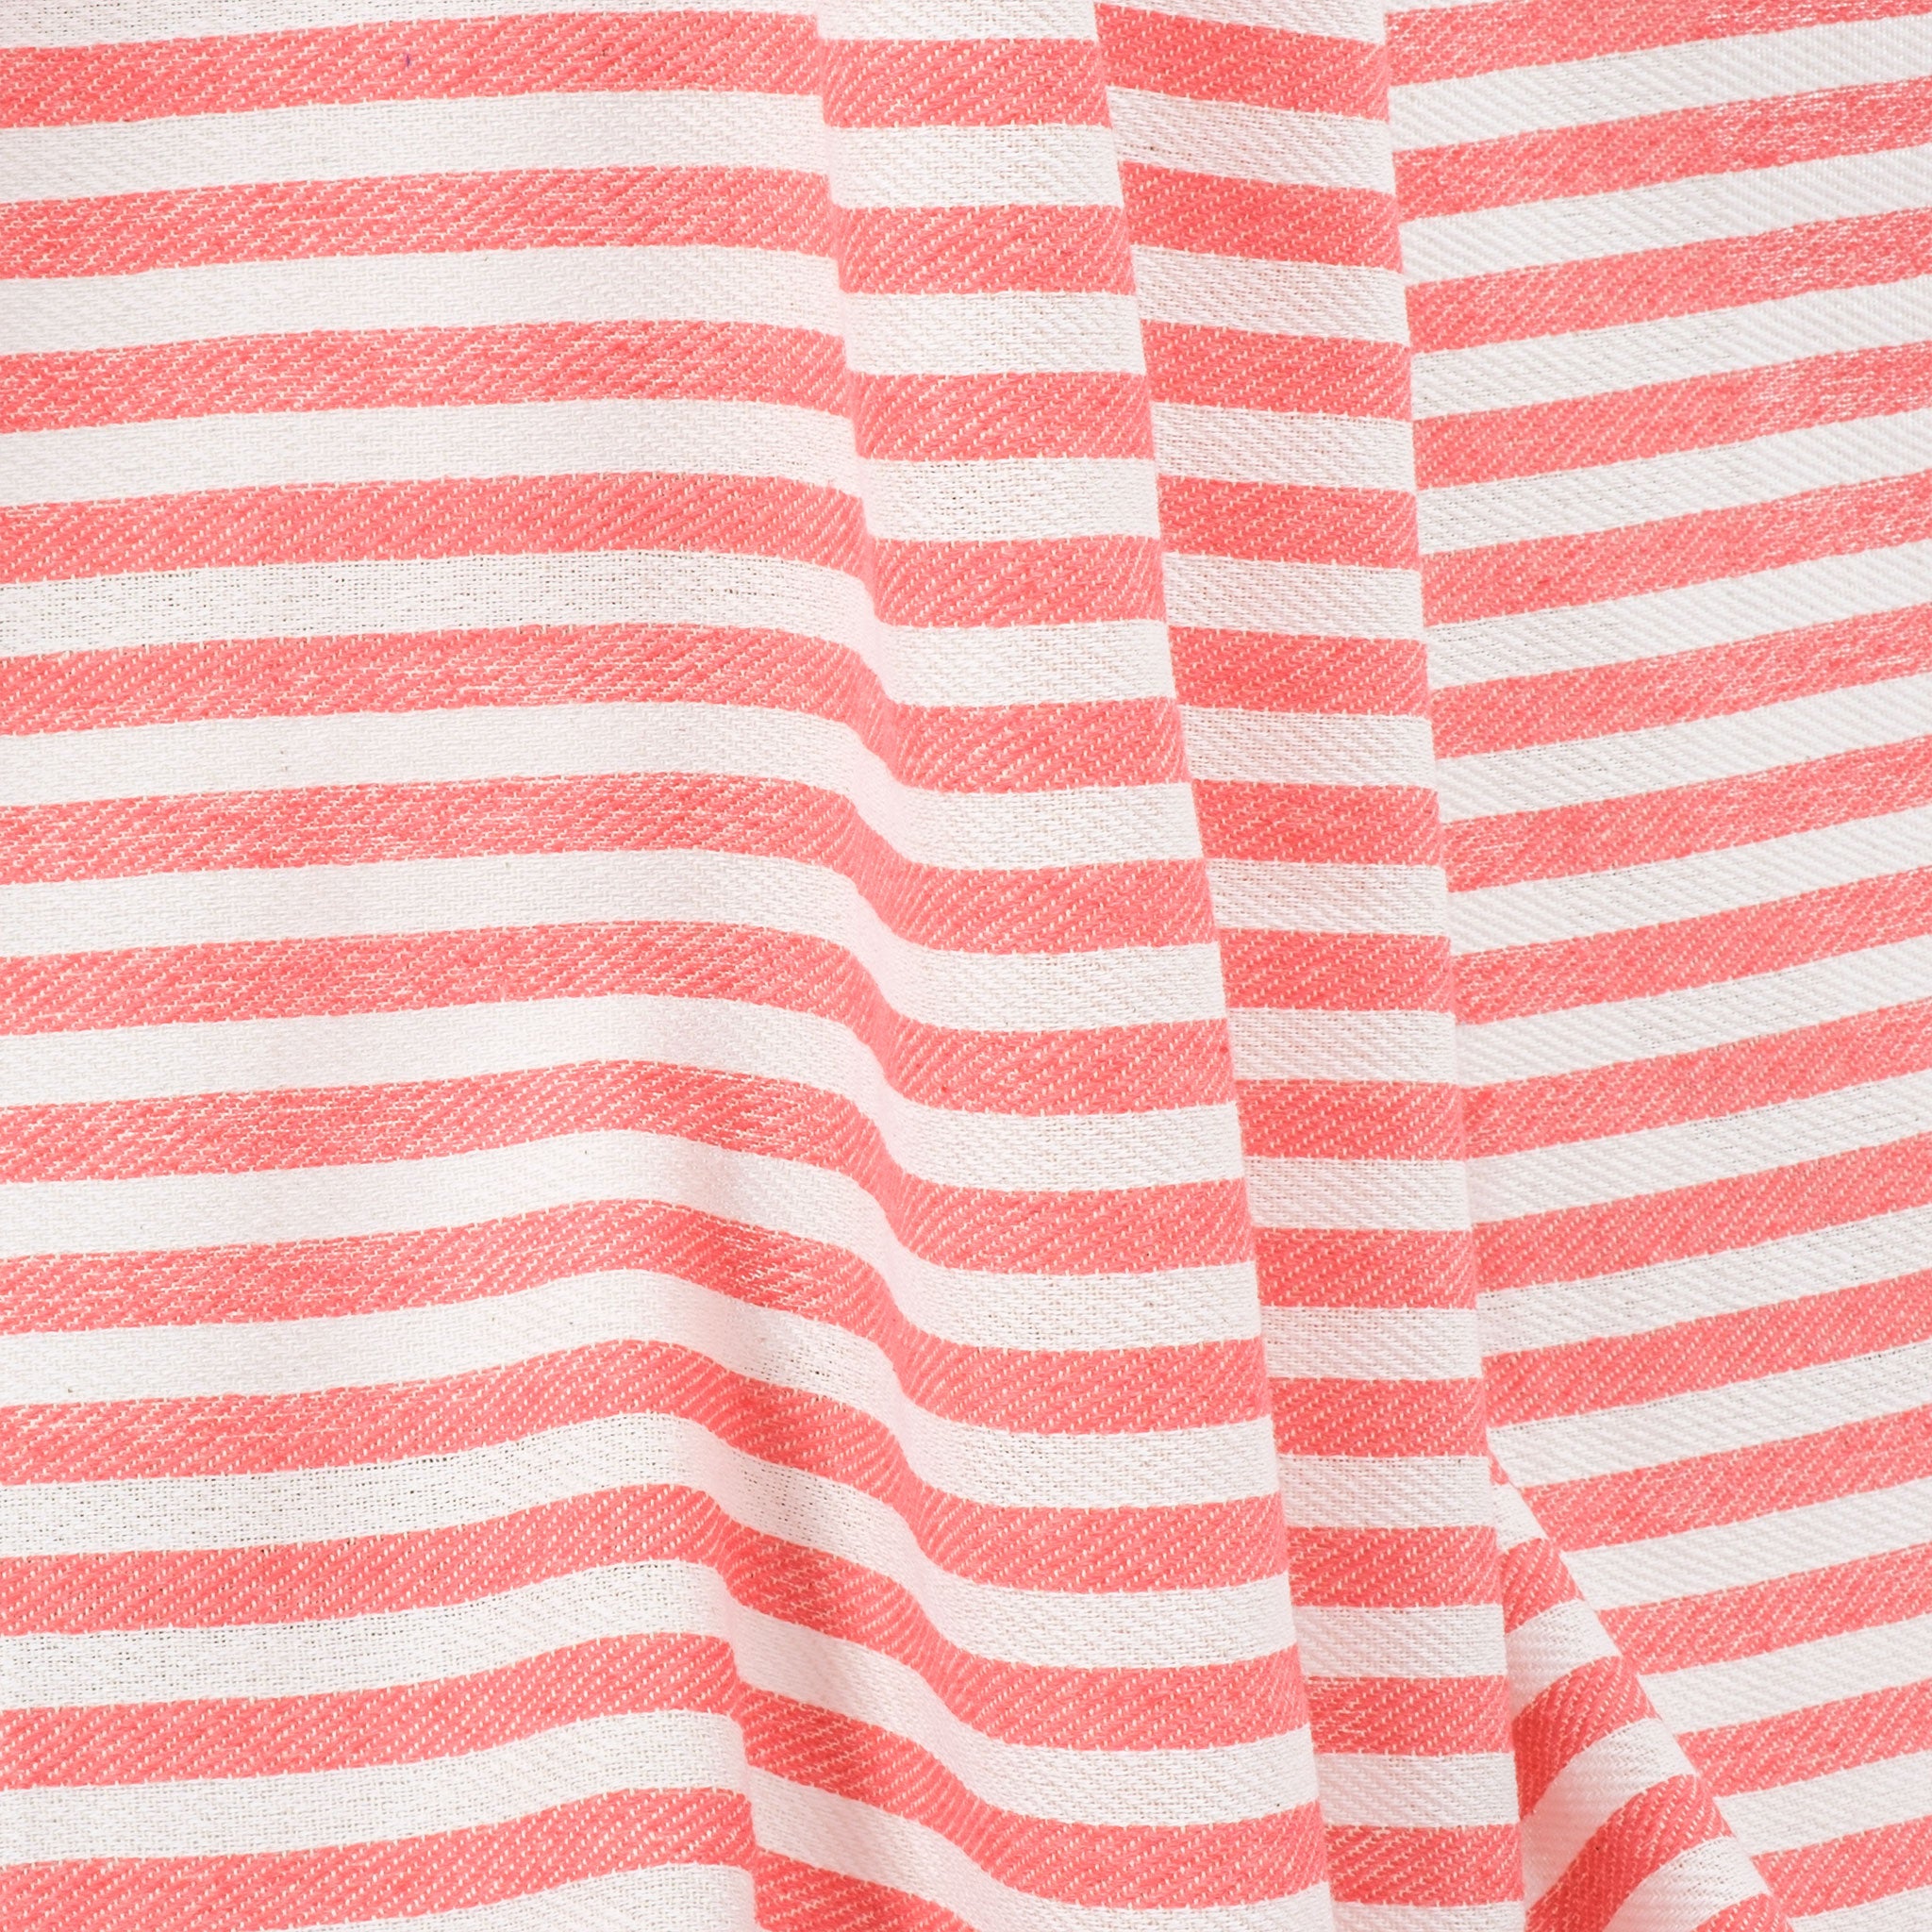 American Soft Linen - 100% Cotton Turkish Peshtemal Towels - 44 Set Case Pack - Coral-Stripe - 2